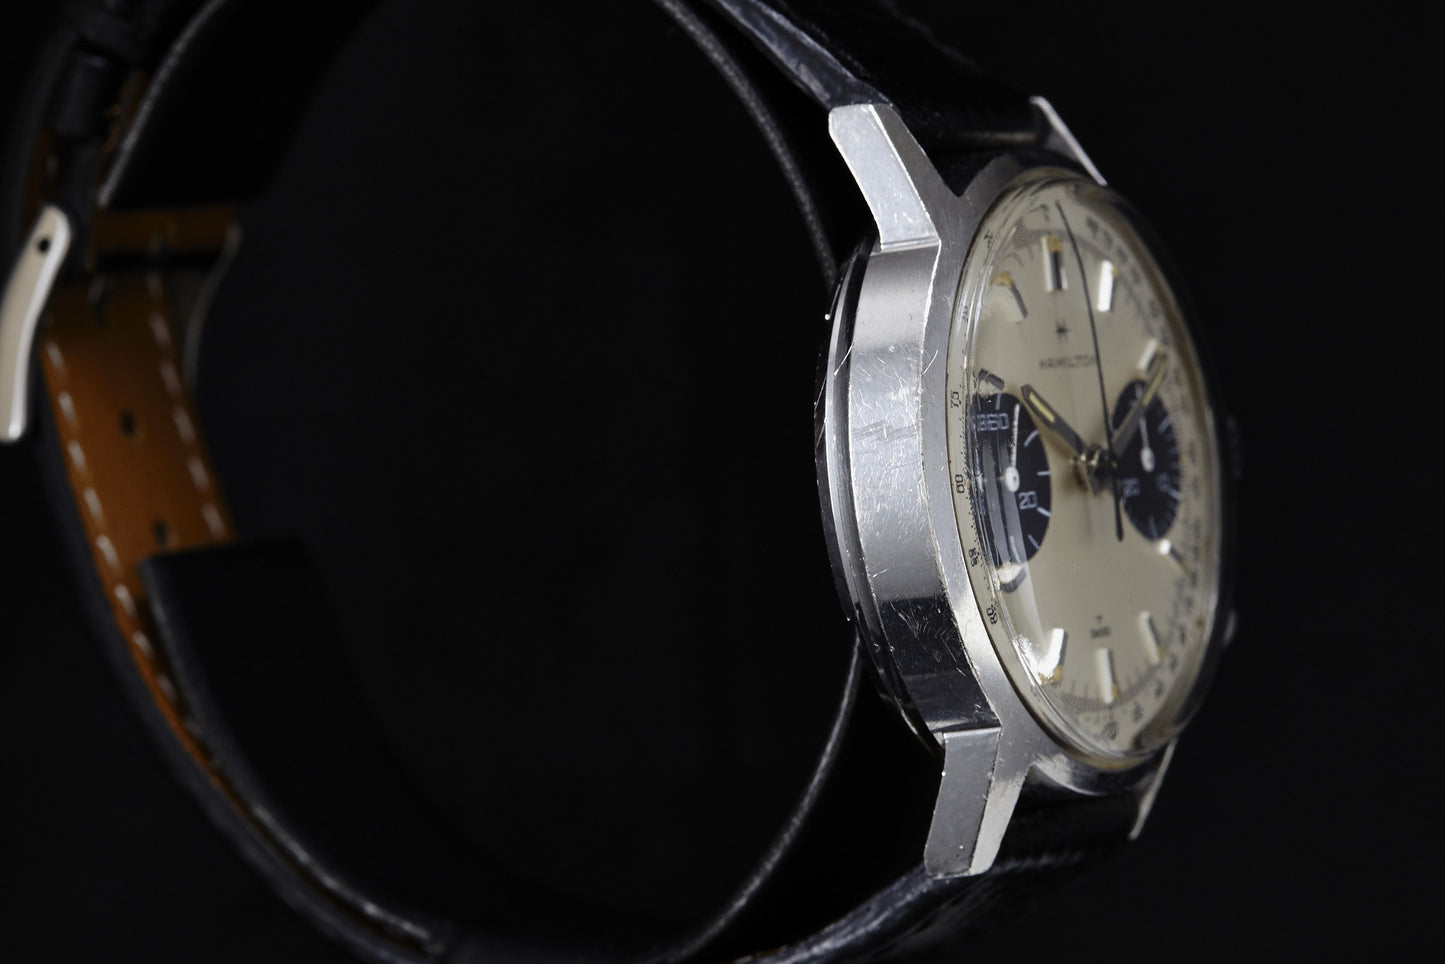 Hamilton Panda Dial Chronograph "Poor Man's Carrera" - Gear Patrol Exclusive